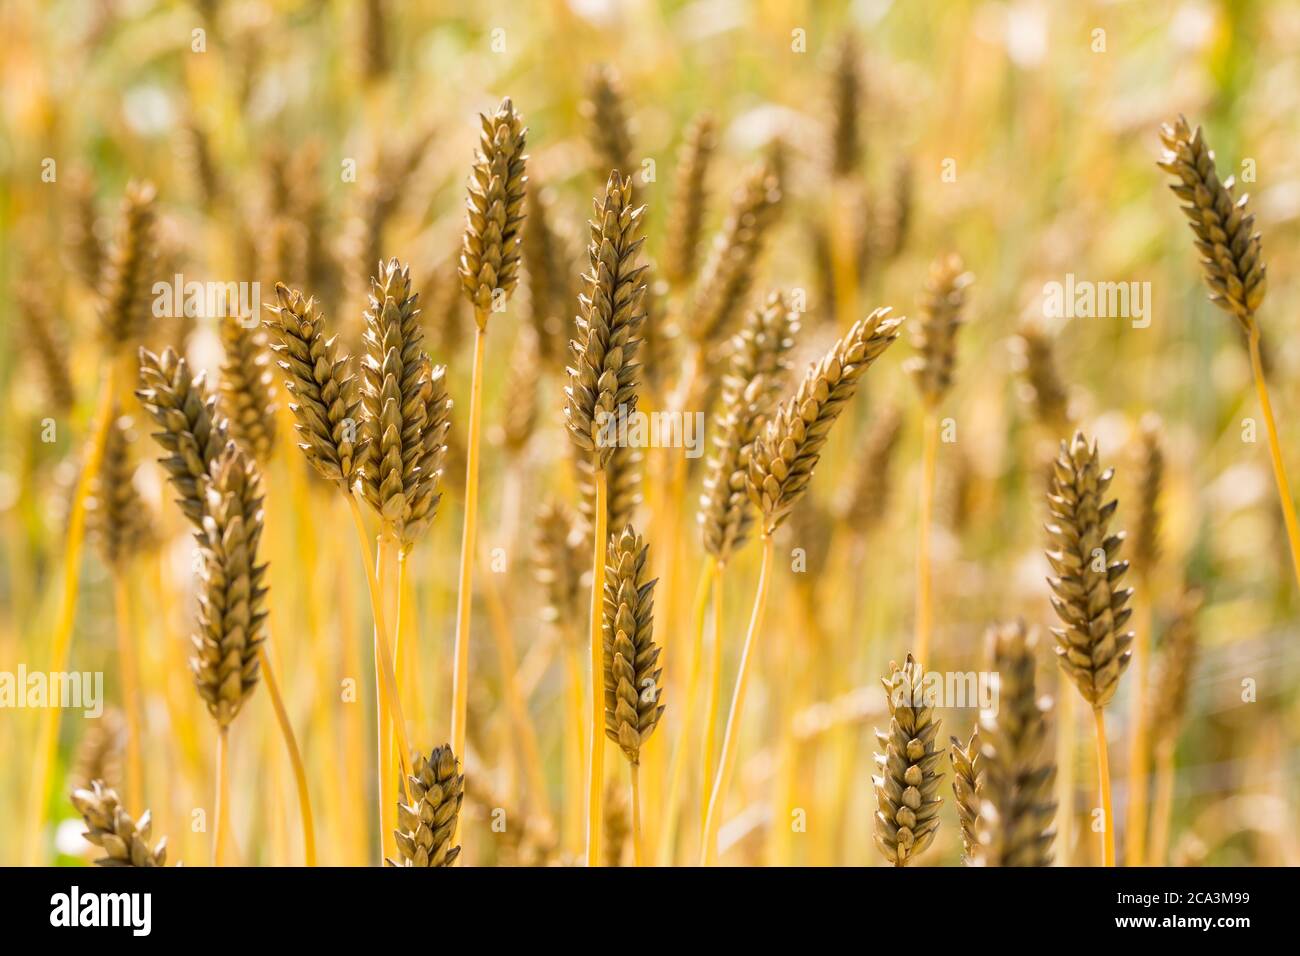 Barley field. Golden barley ears close up. Basis for beer and destilled beverages. Latin name Hordeum vulgare convar. vulgare var. dundarbeyi Stock Photo